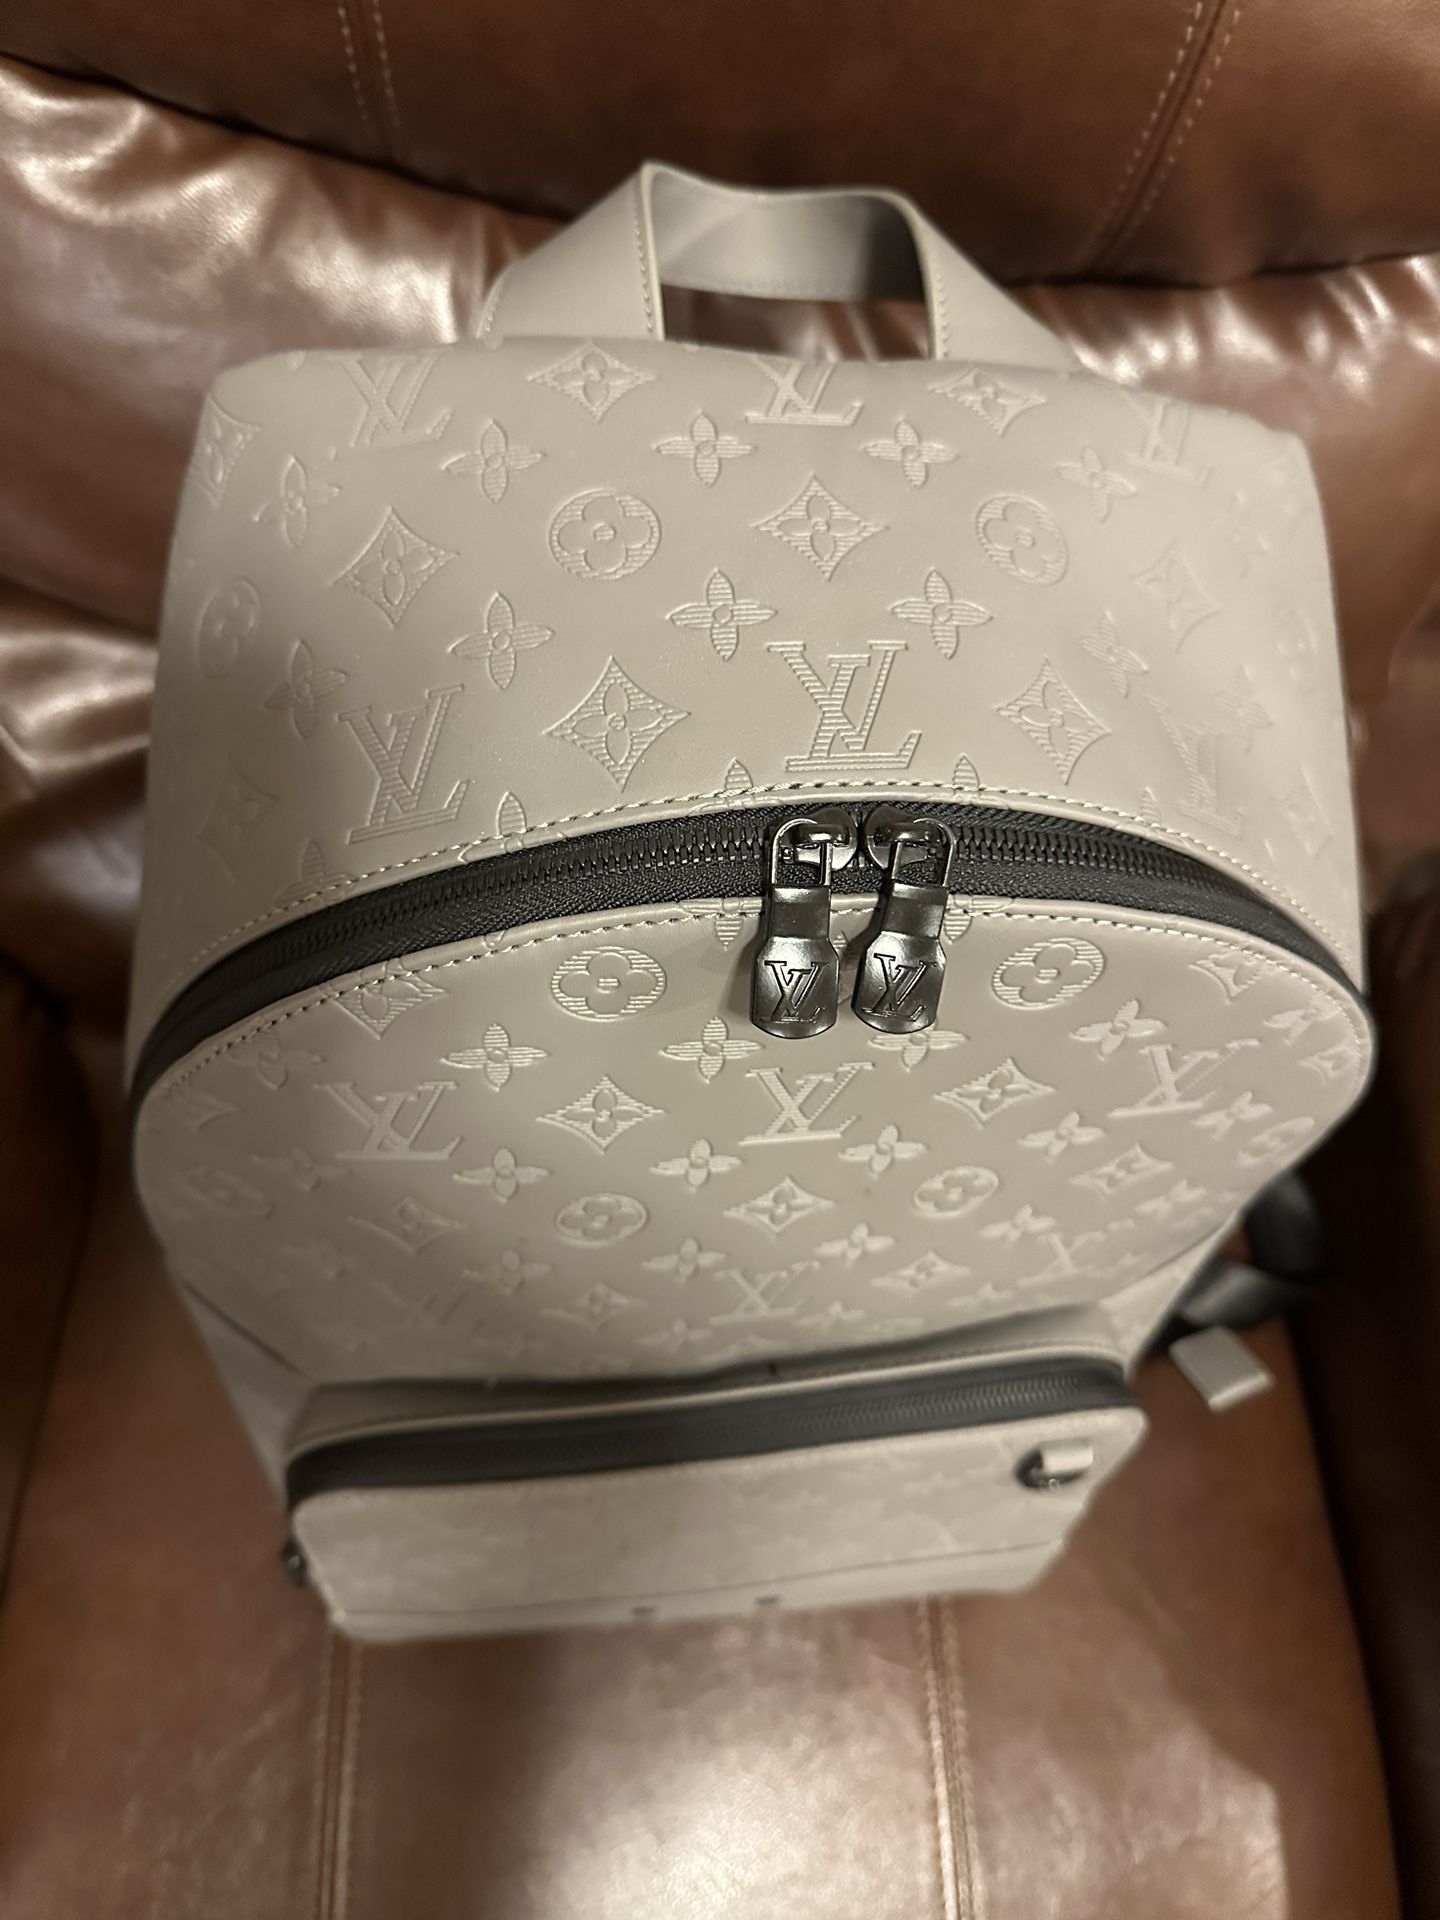 Louis Vuitton Backpack 